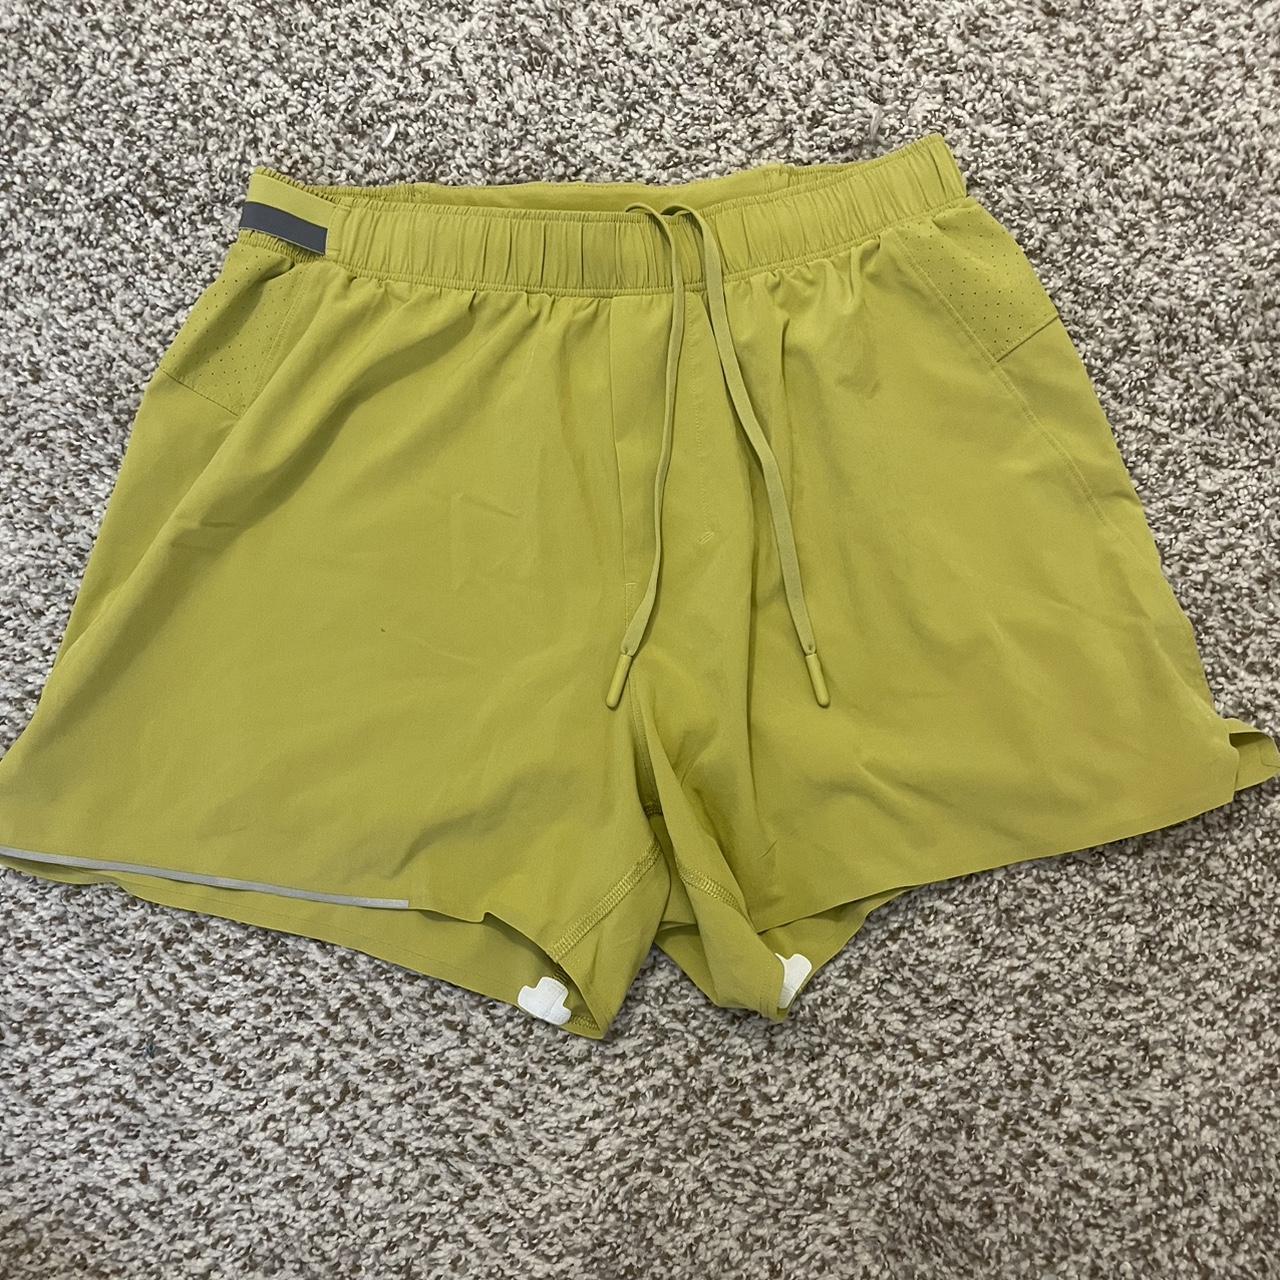 Lululemon Men's Yellow and Green Shorts